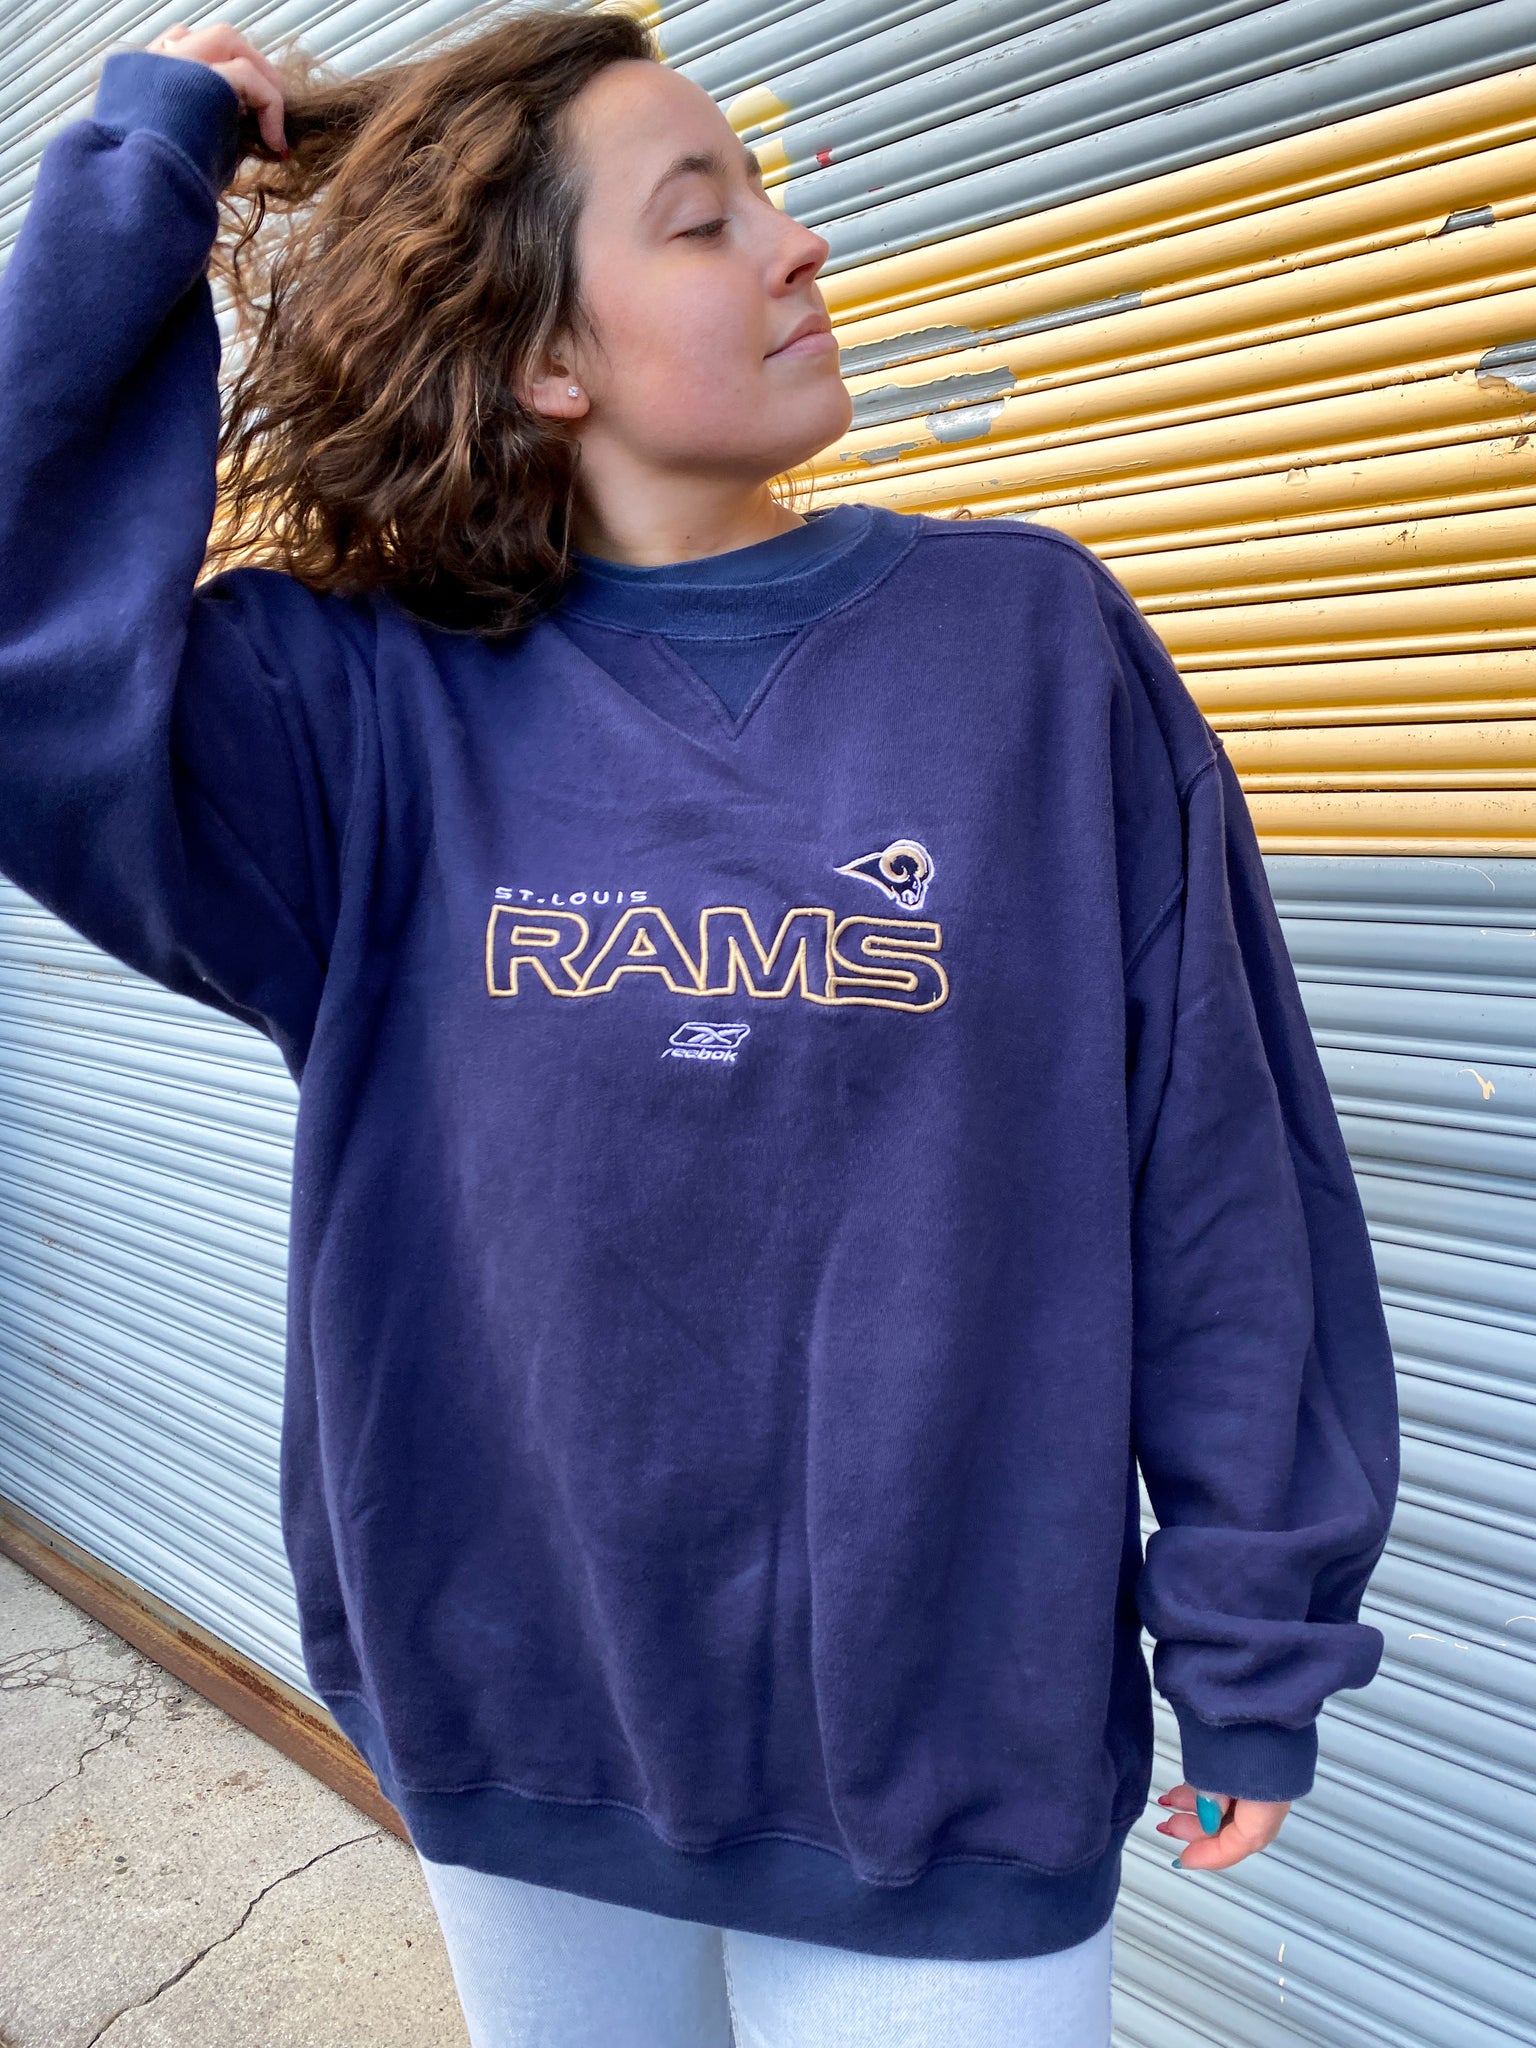 Vintage Russell Athletic St Louis Rams Crew Neck Sweatshirt (Size